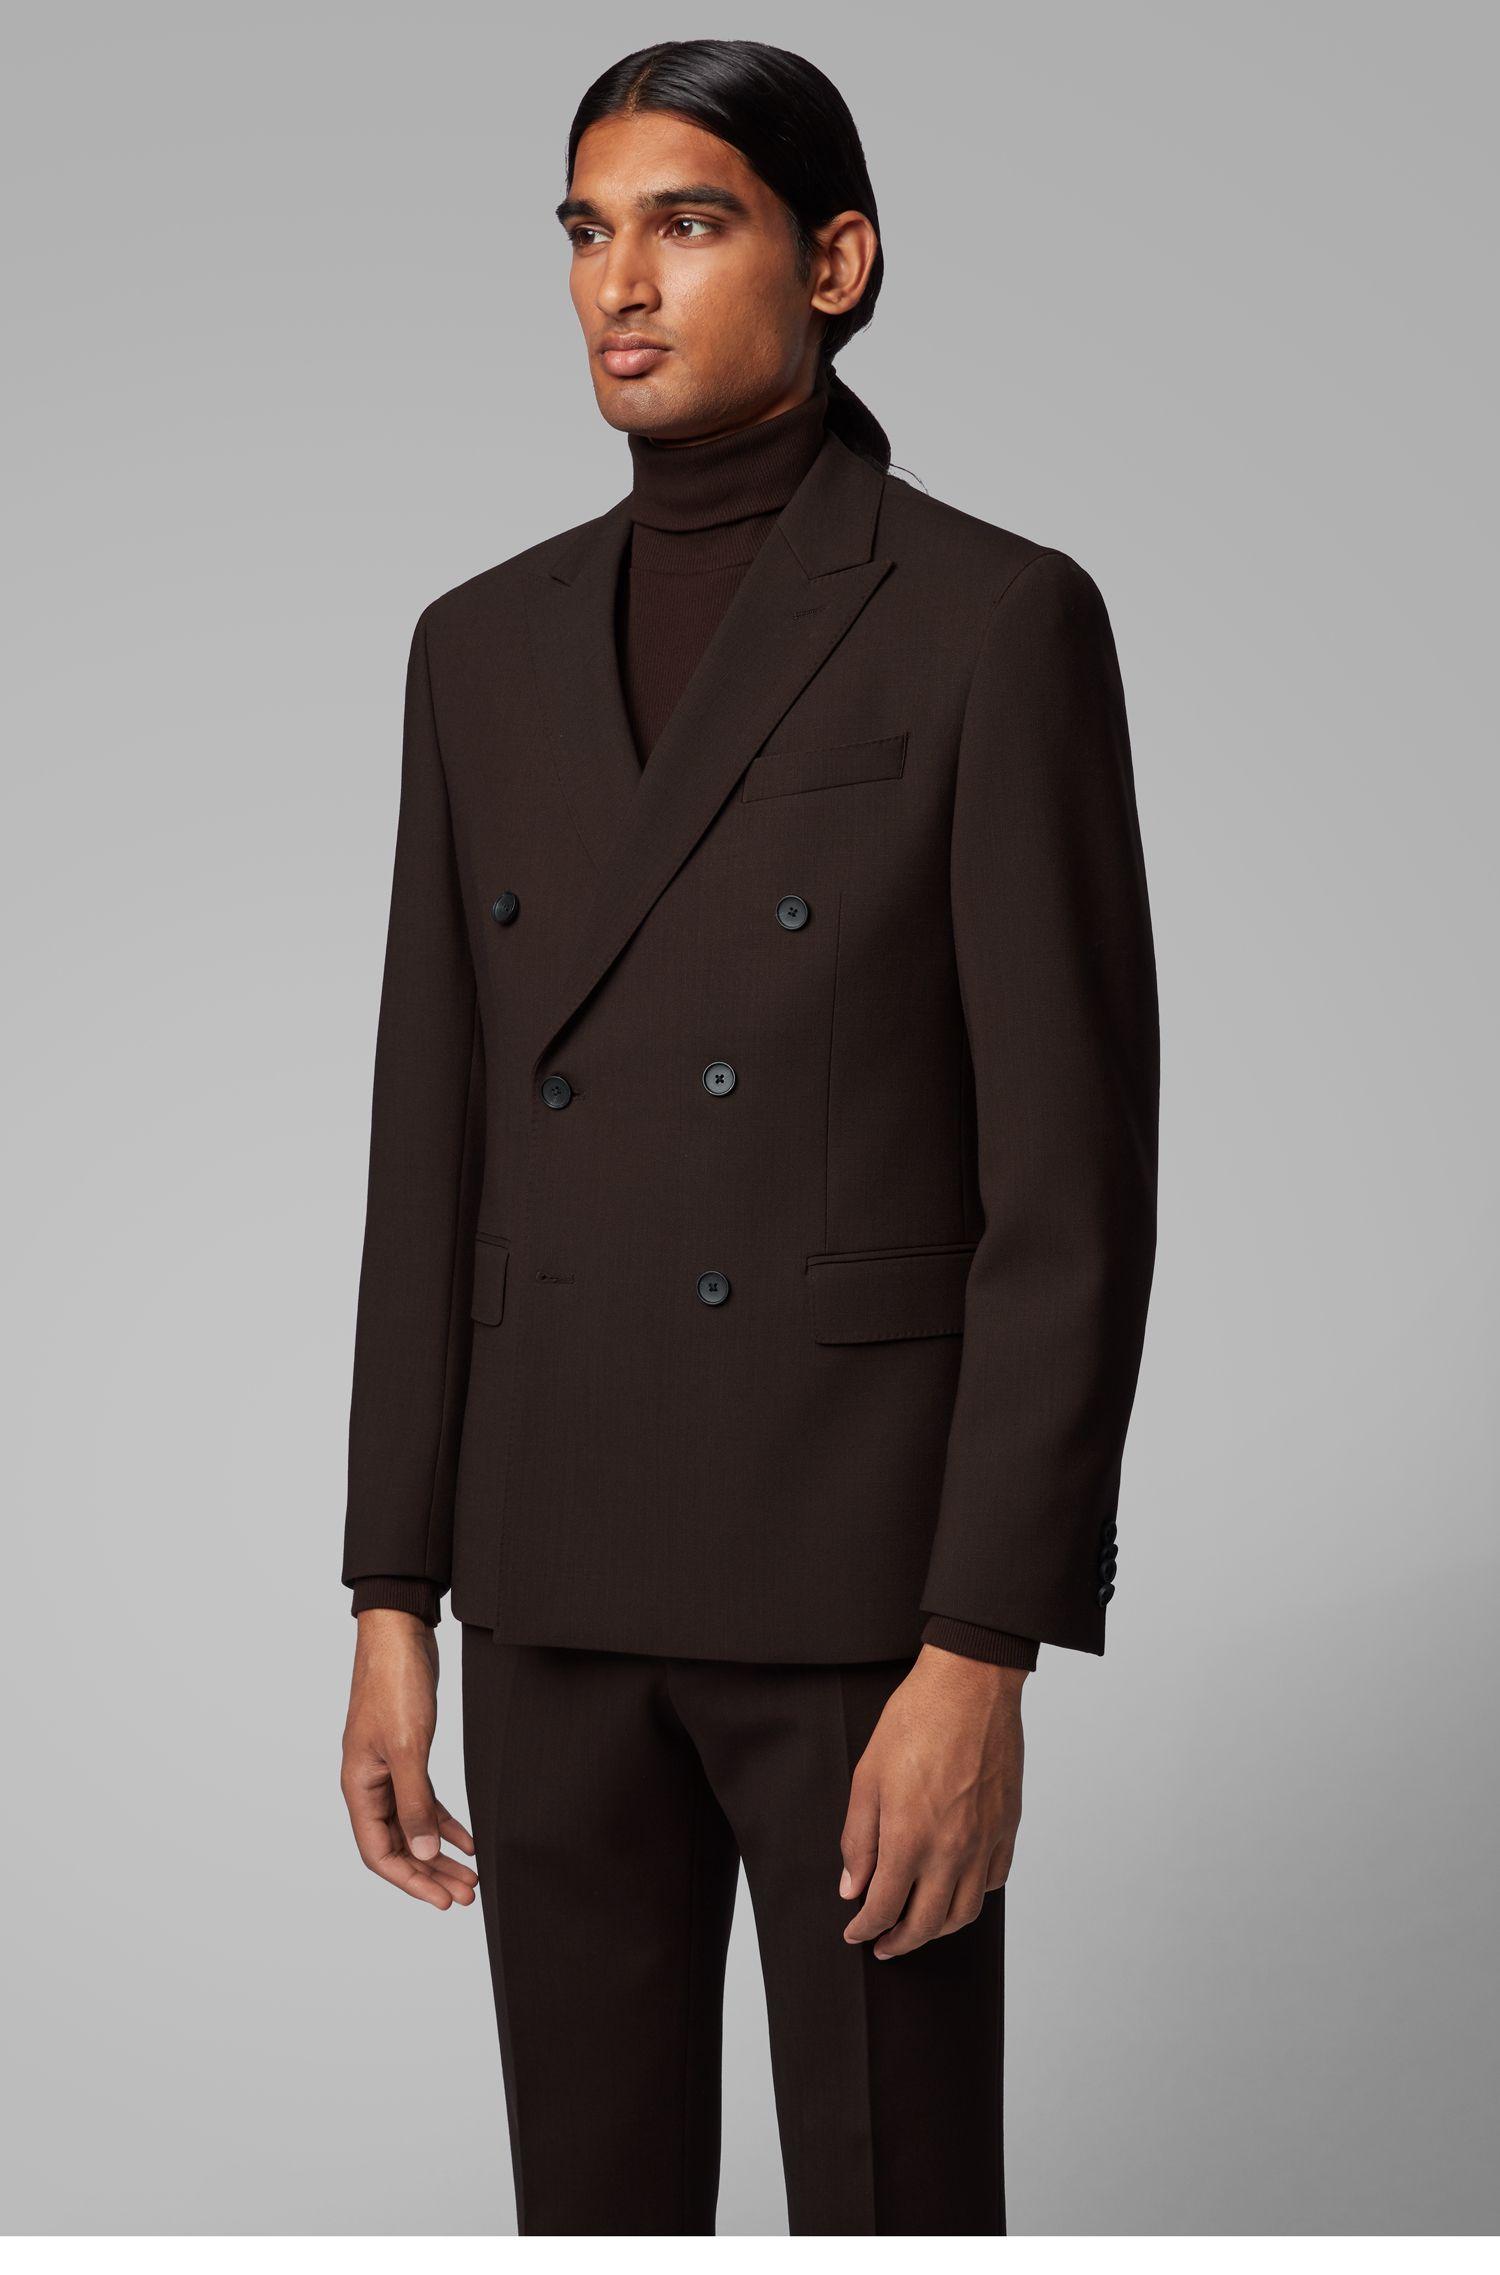 BOSS by HUGO BOSS Slim-fit Double-breasted Suit In Stretch Virgin Wool in  Dark Brown (Brown) for Men - Lyst